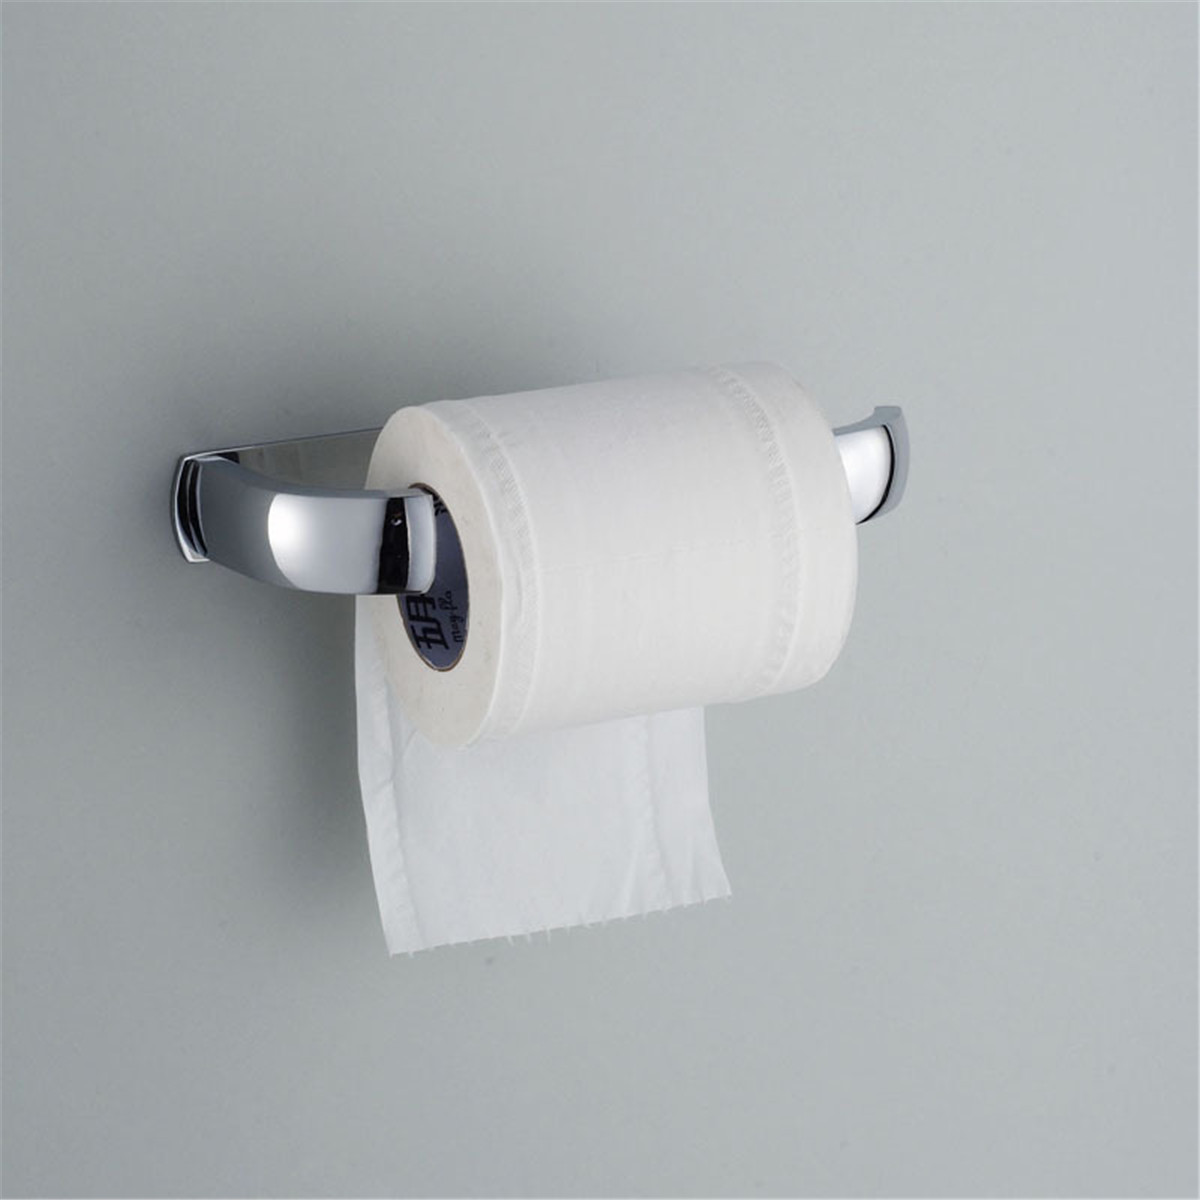 Stainless-Steel-Bathroom-Paper-Shelf-Holder-Tissue-Roll-Rack-Stand-Brecket-Wall-Mount-1333052-7